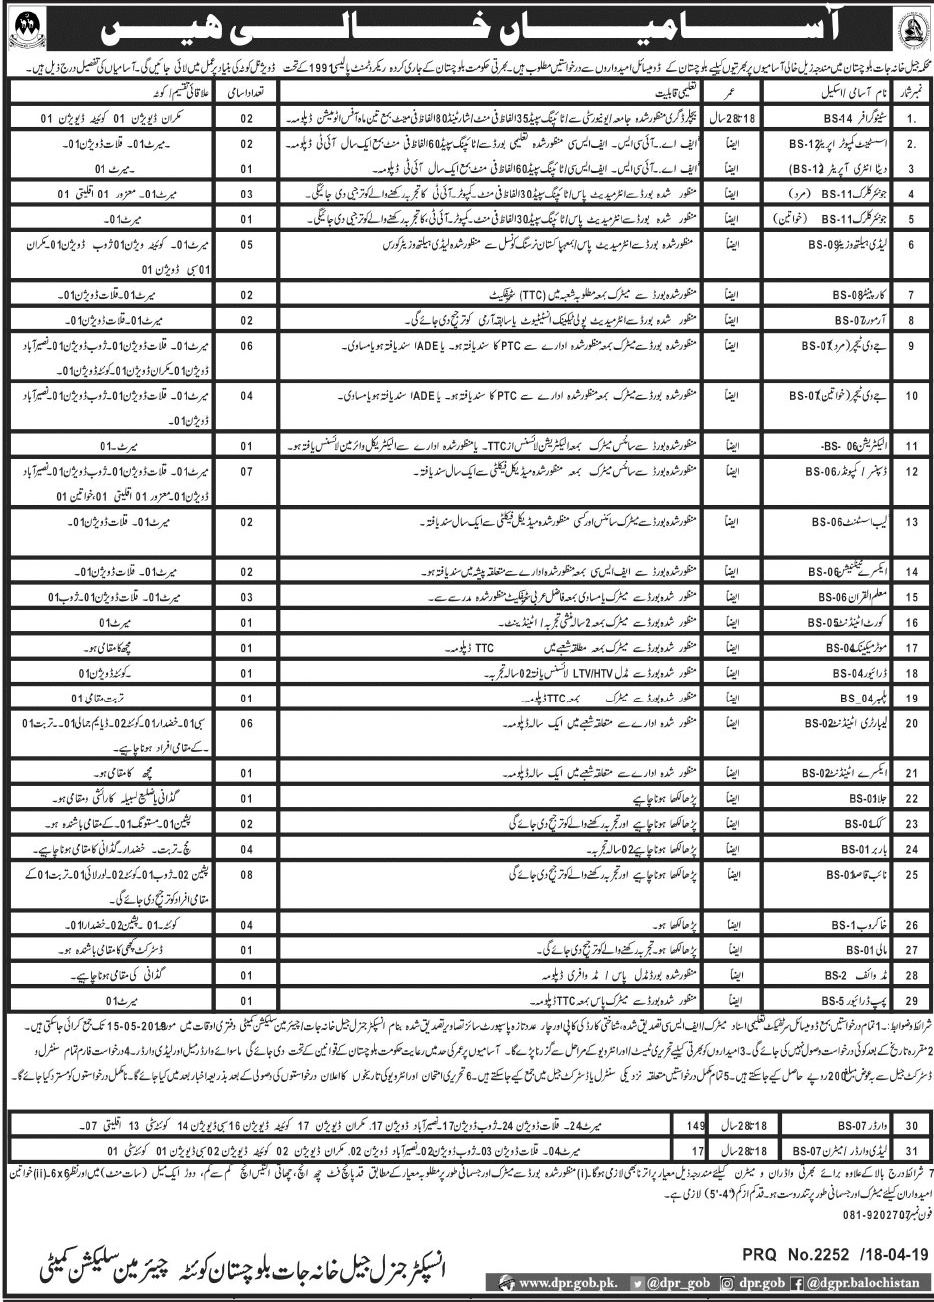 Prisons Department Balochistan jobs 2019